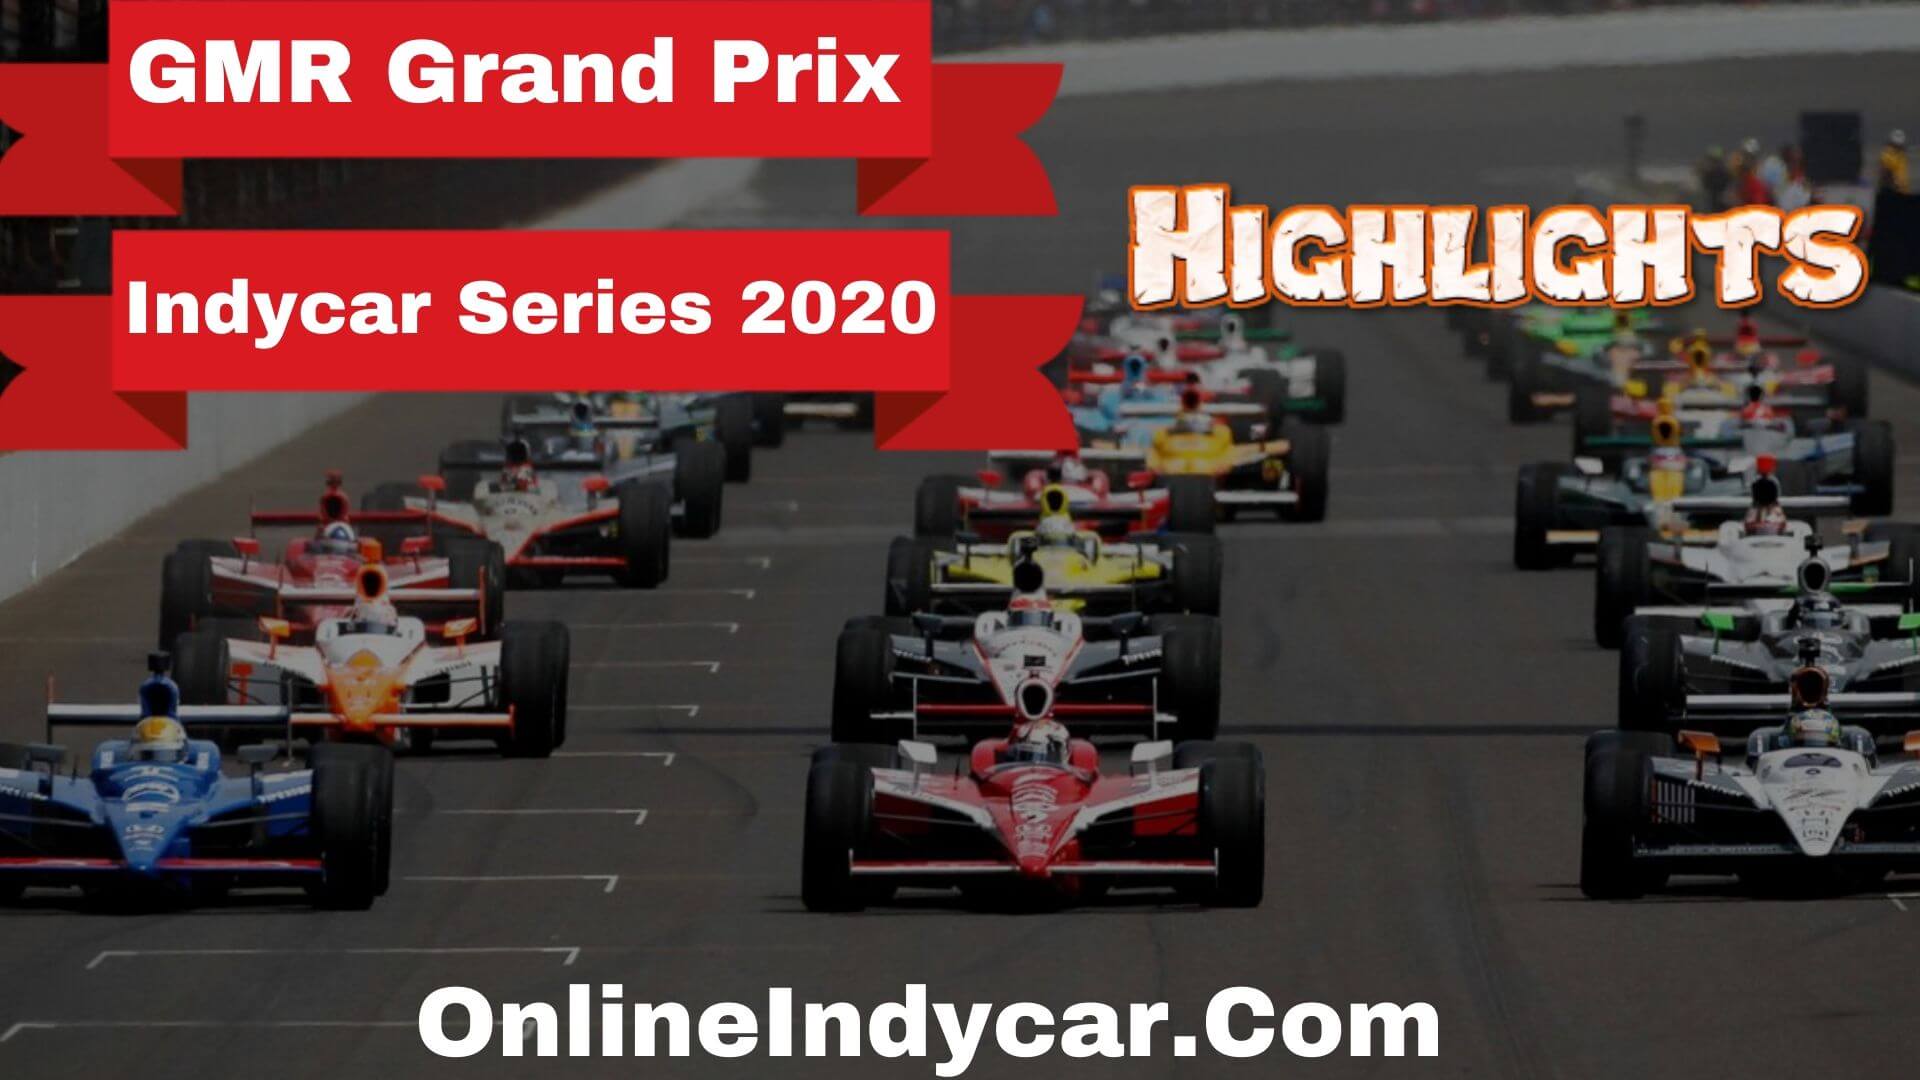 GMR Grand Prix Indycar Series Highlights 2020